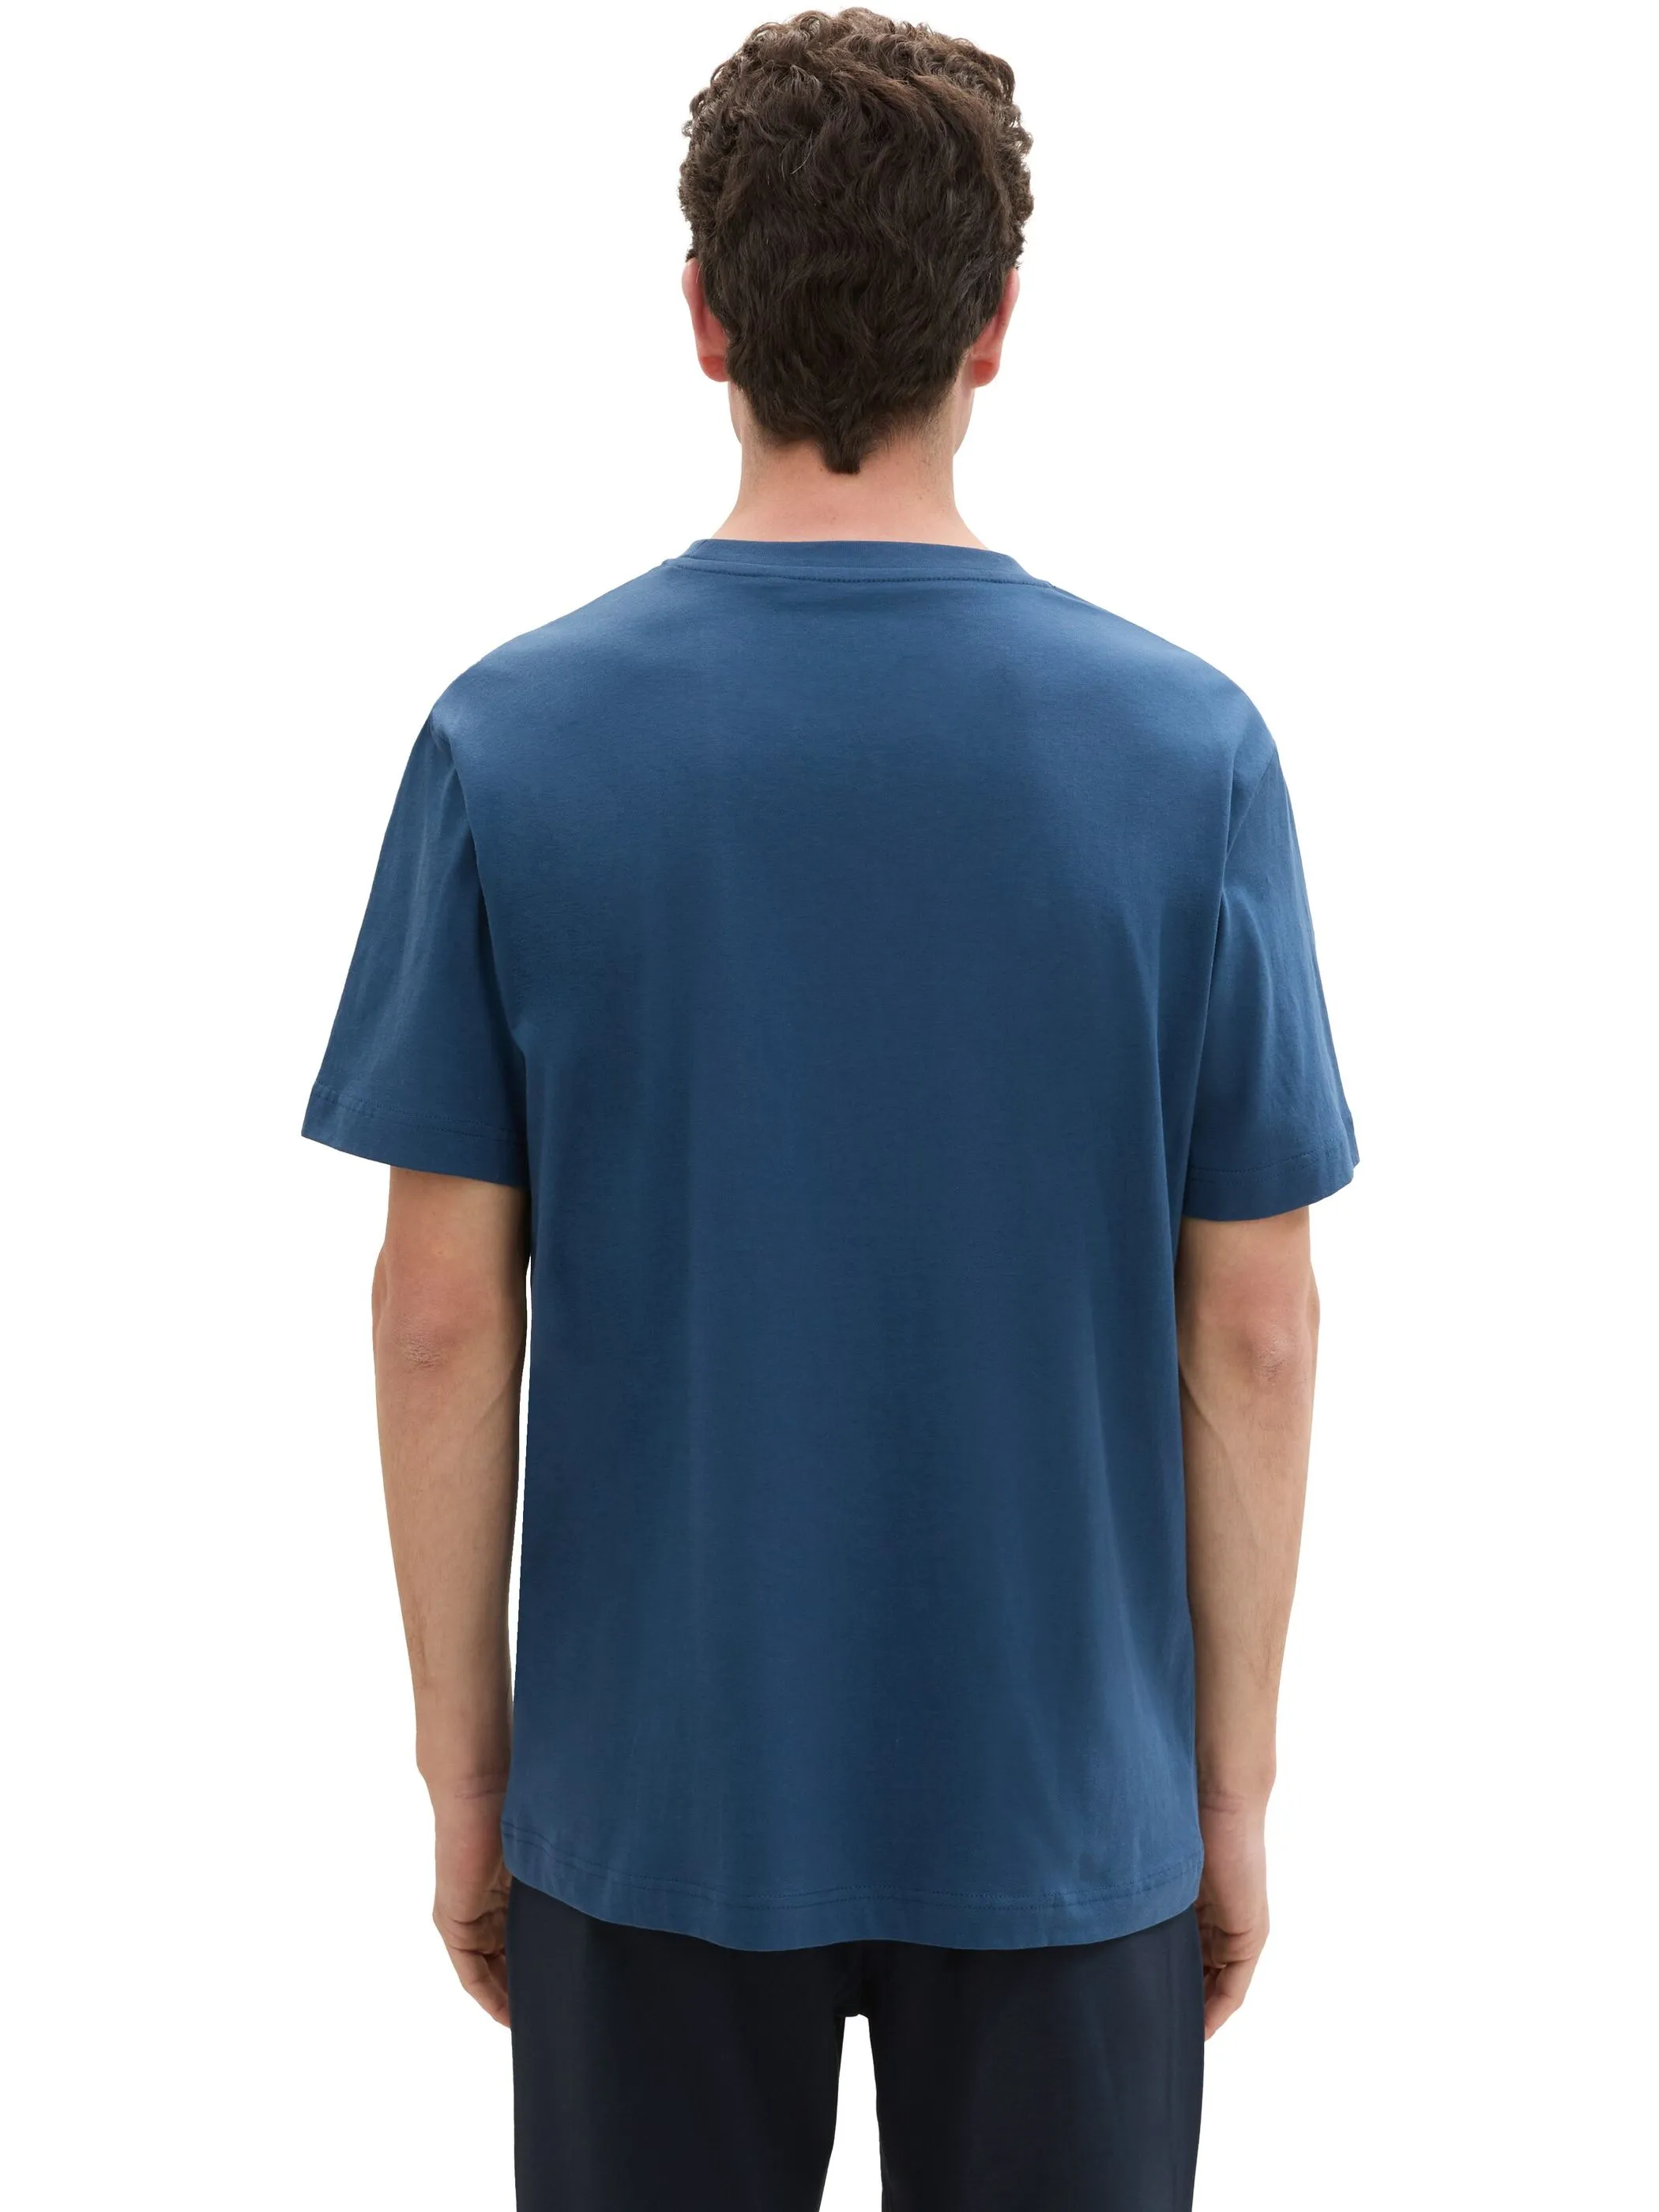 Tom Tailor 1043276 t-shirt with print Blau 898849 26779 2